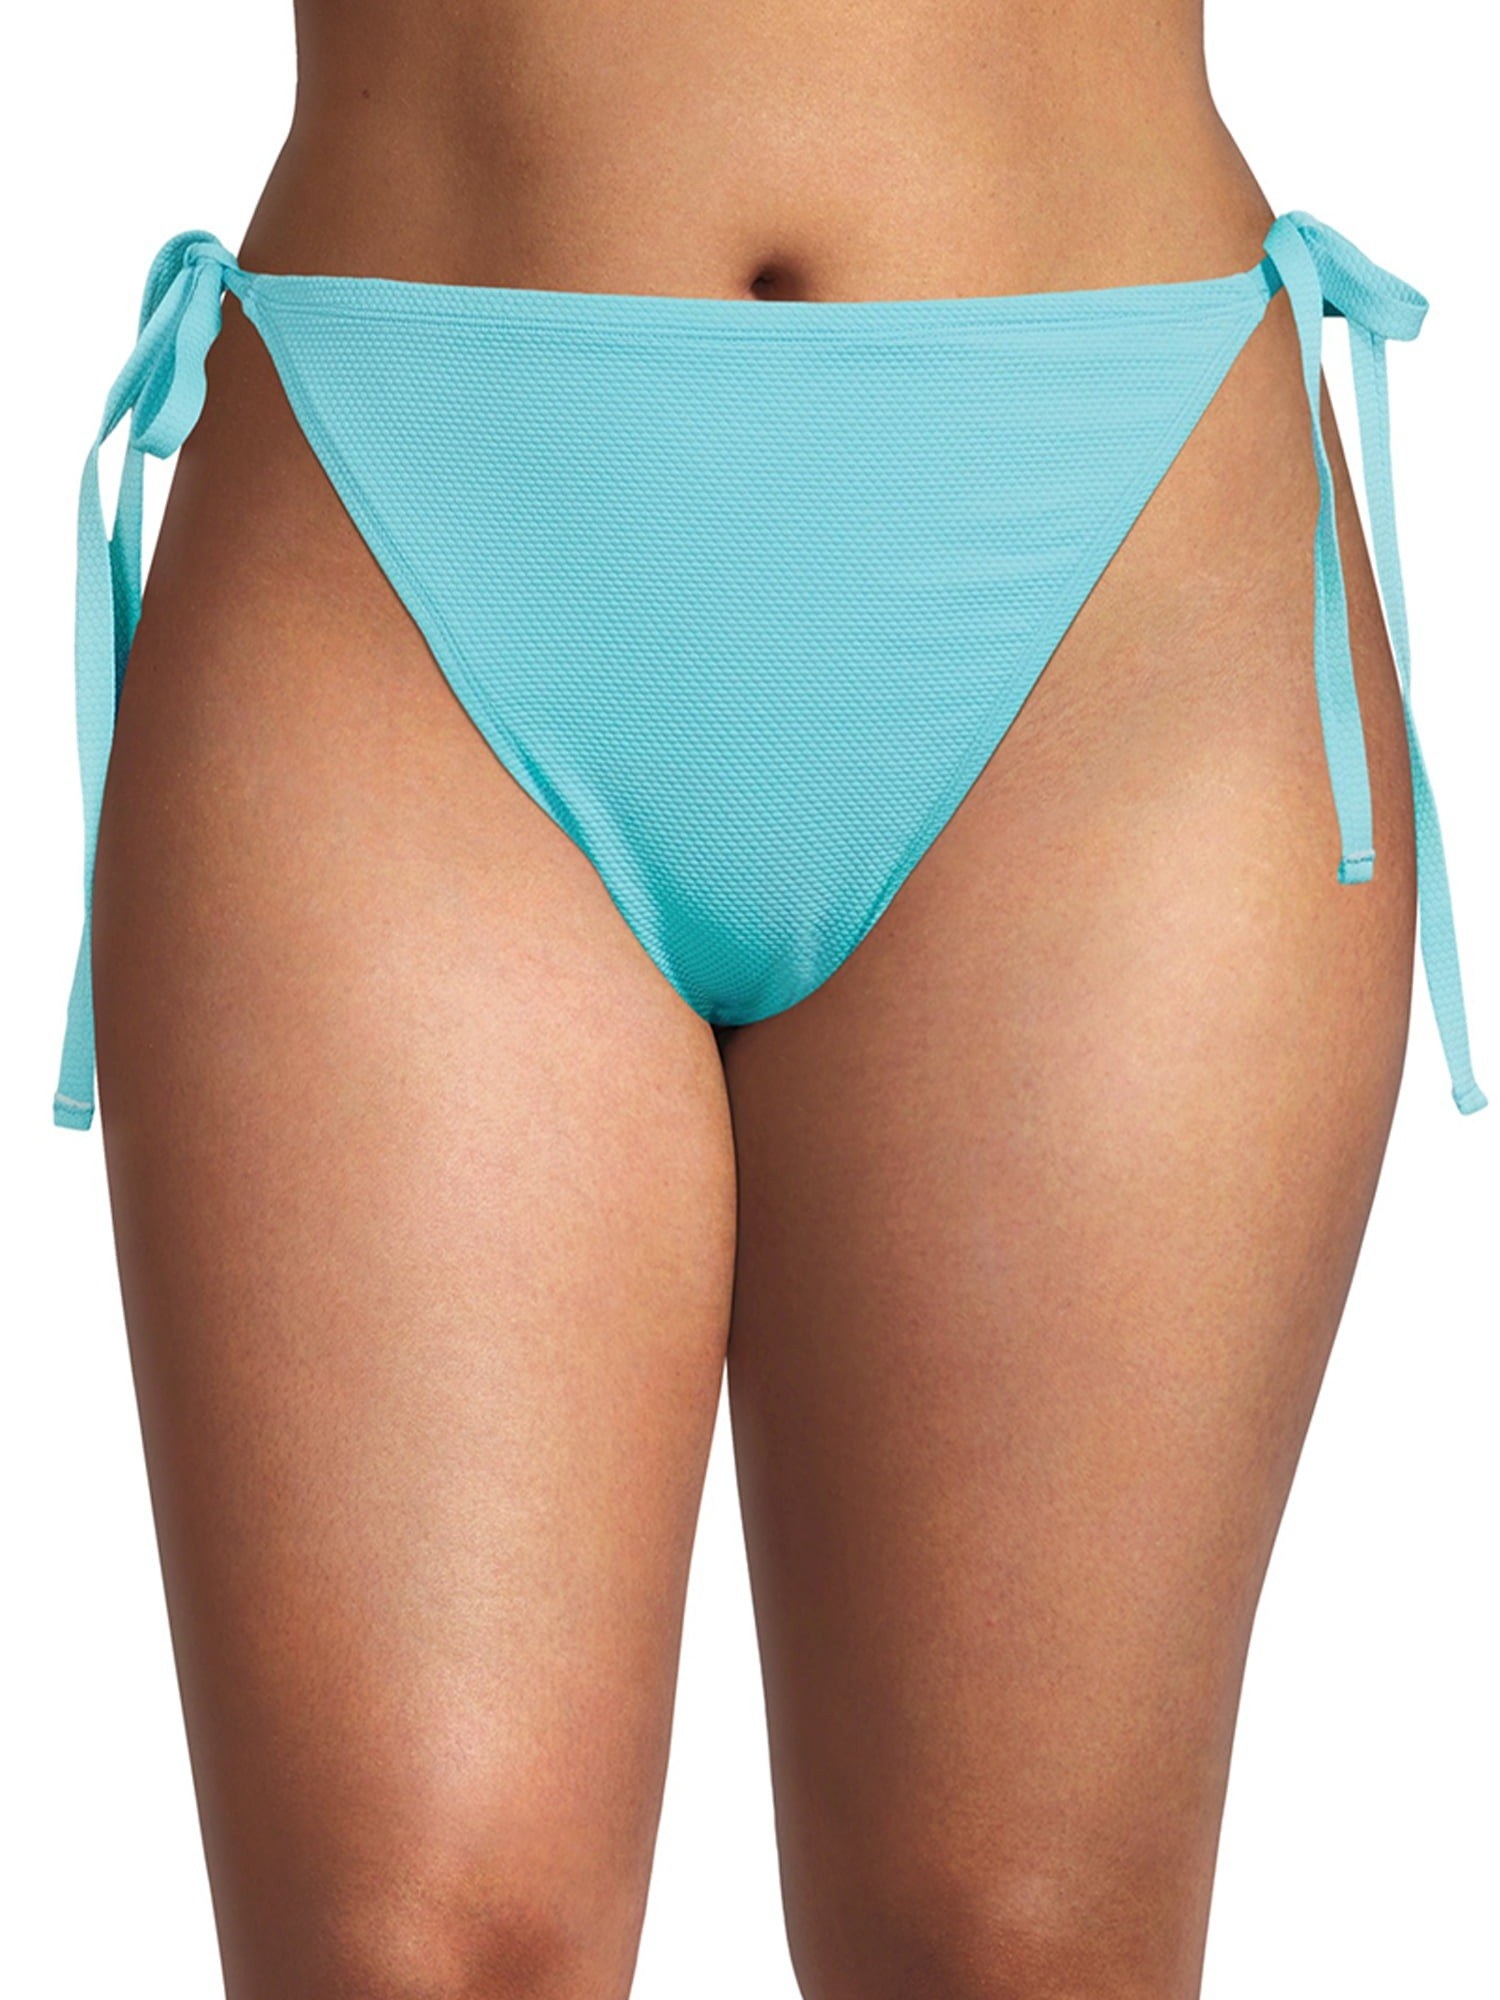 Model wearing light blue string bikini bottoms